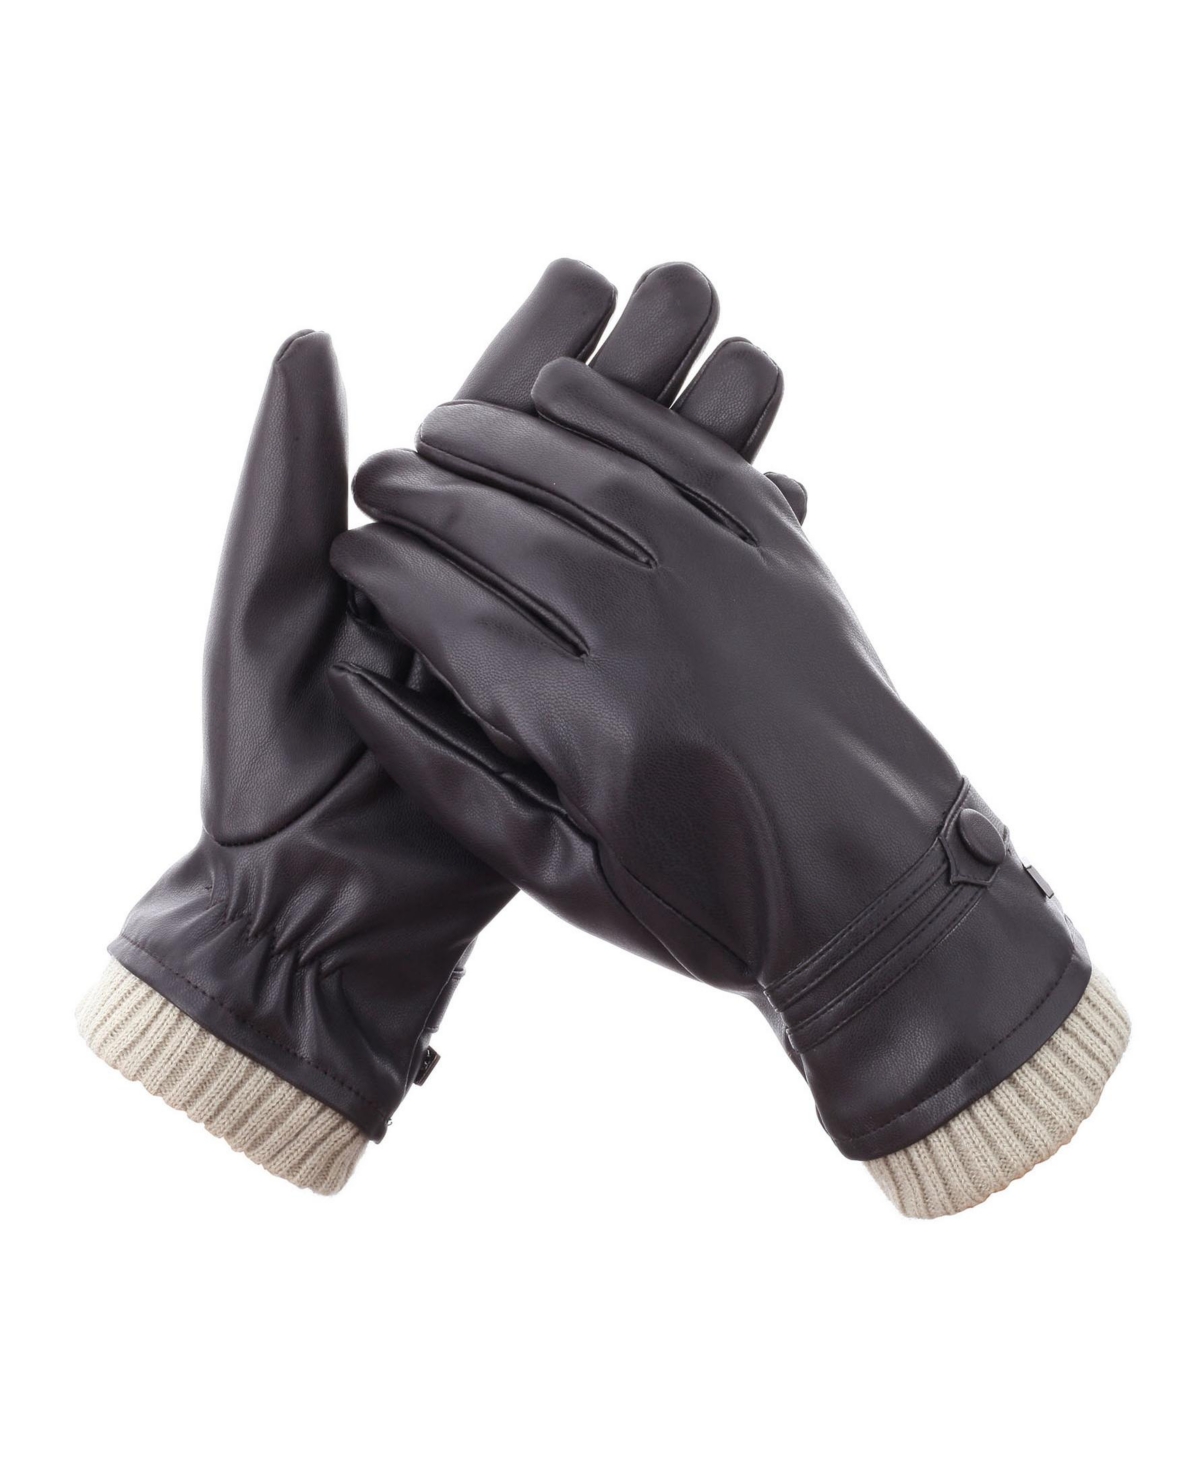 Men's Classic Touchscreen Lined Winter Gloves - Dark ochre